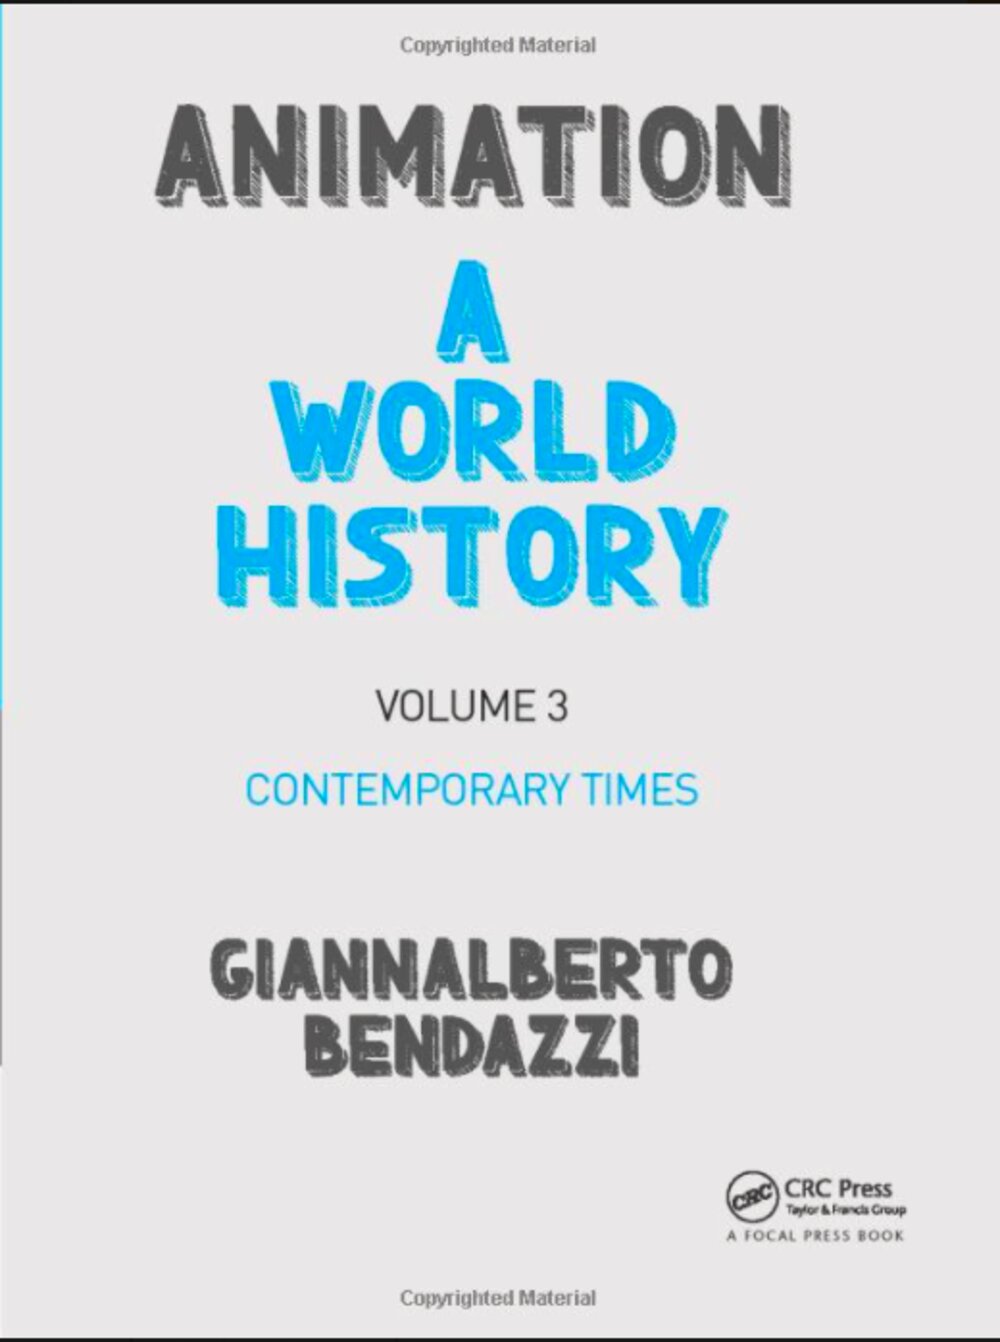 Animation: A World History Vol. 3 (CRC Press)